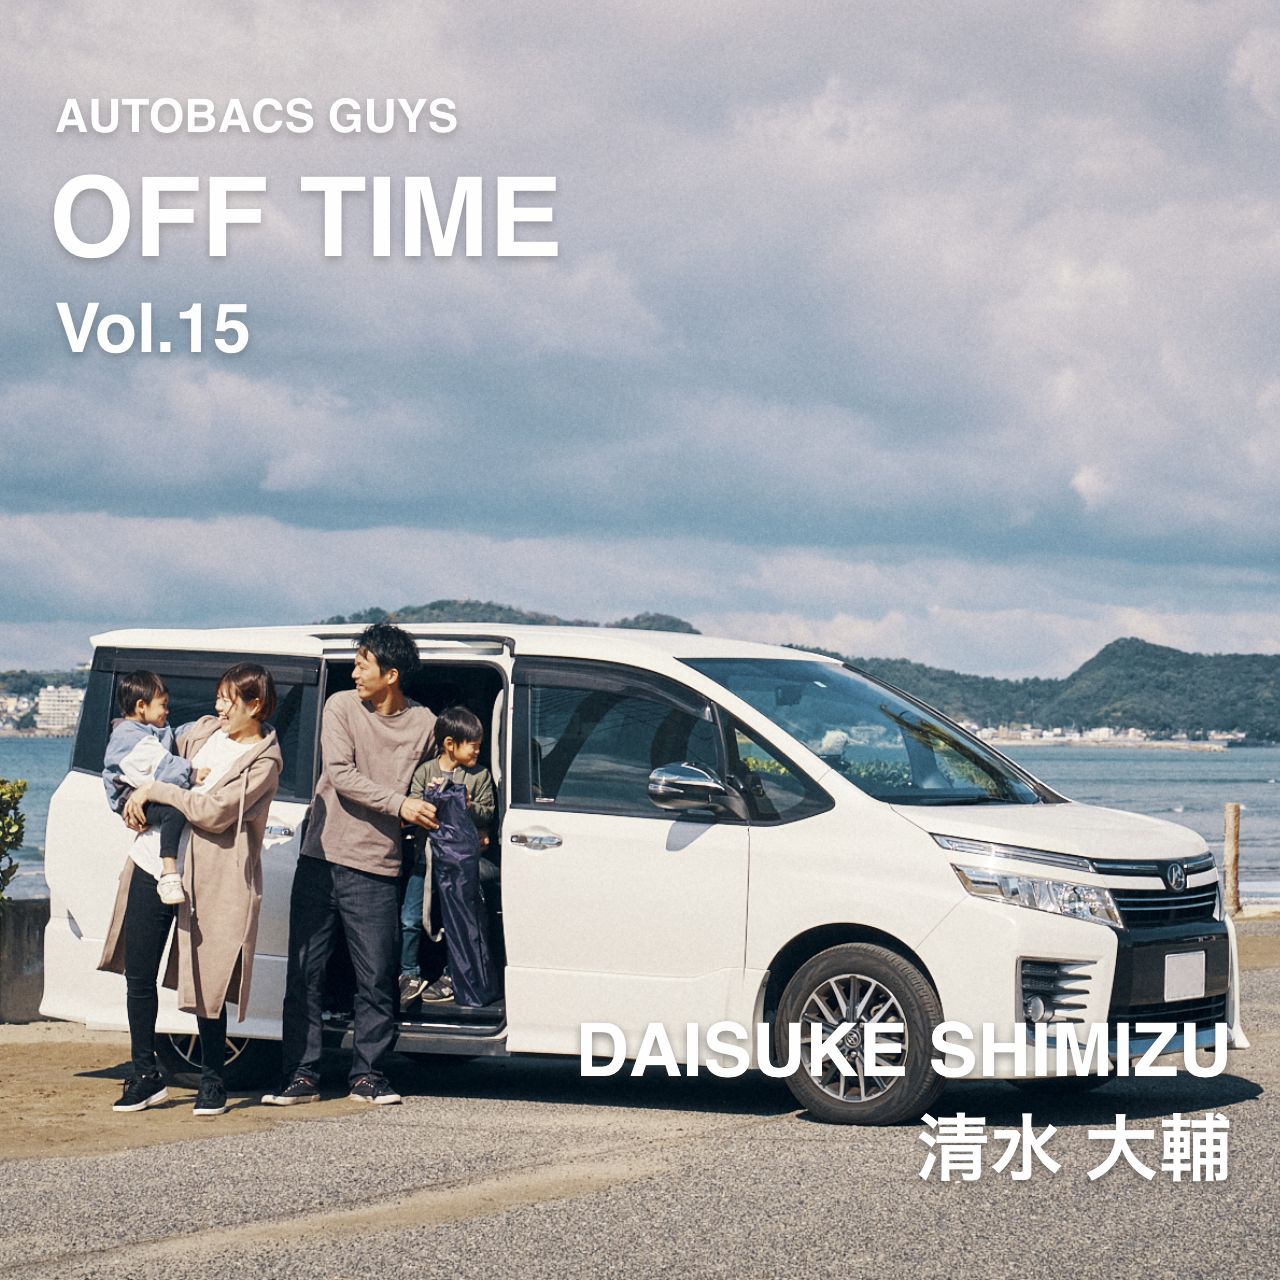 AUTOBACS GUYS OFF TIME / ON TIME オートバックスガイズの裏側　Vol.15 : 清水大輔 DAISUKE SHIMIZU